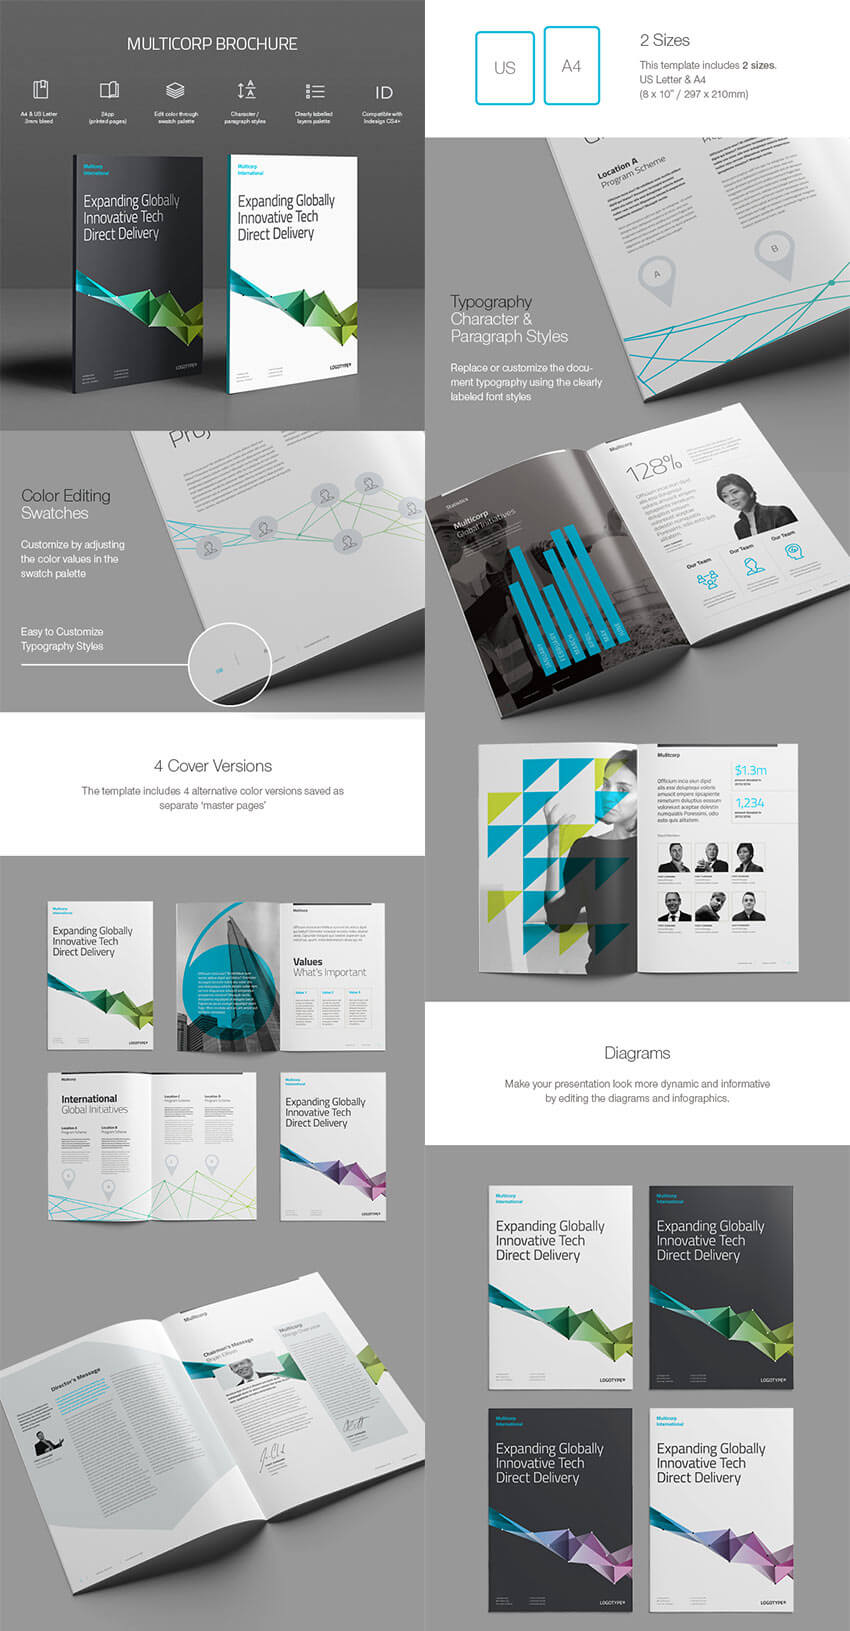 30 Best Indesign Brochure Templates – Creative Business Inside Adobe Indesign Brochure Templates